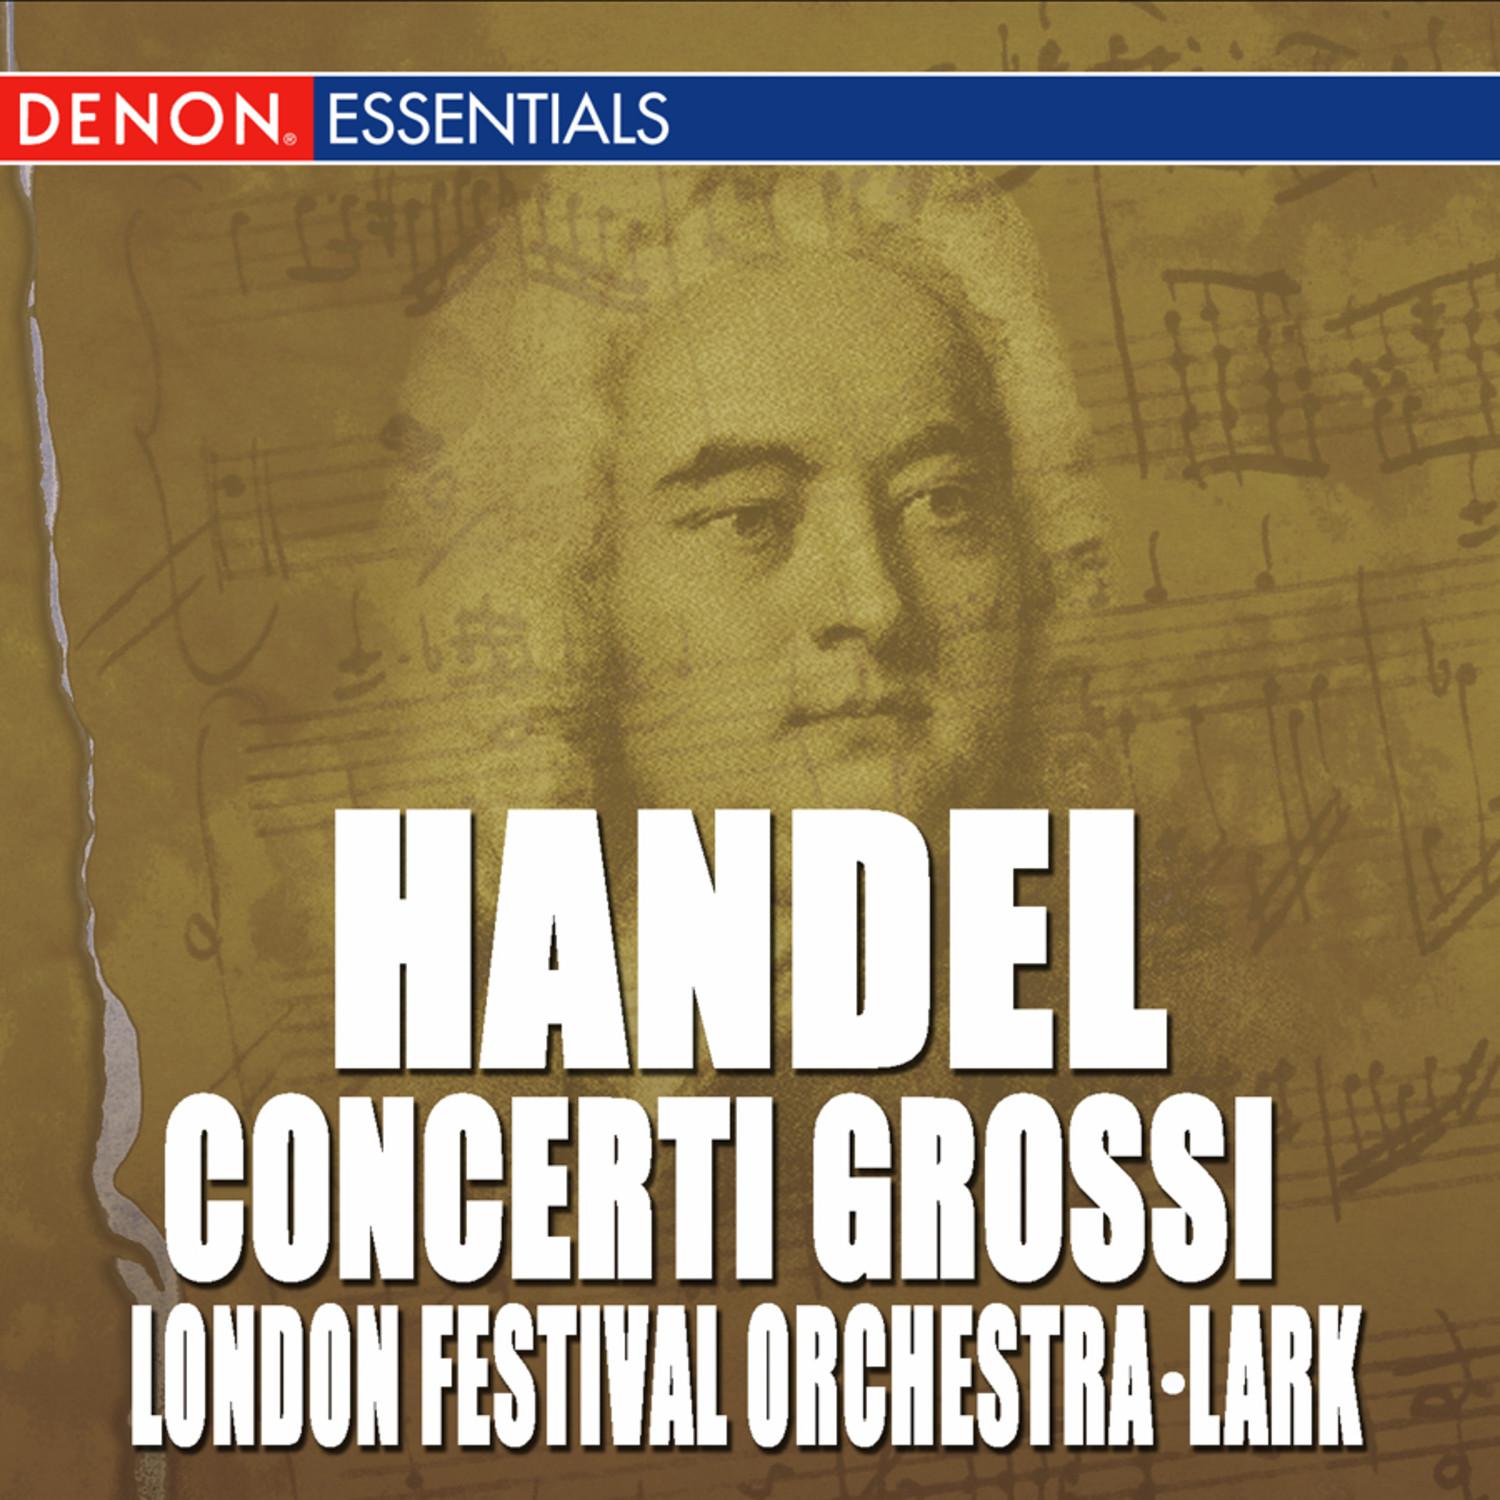 Concerto Grosso Op. 6, No 2 in F Major: Allegro